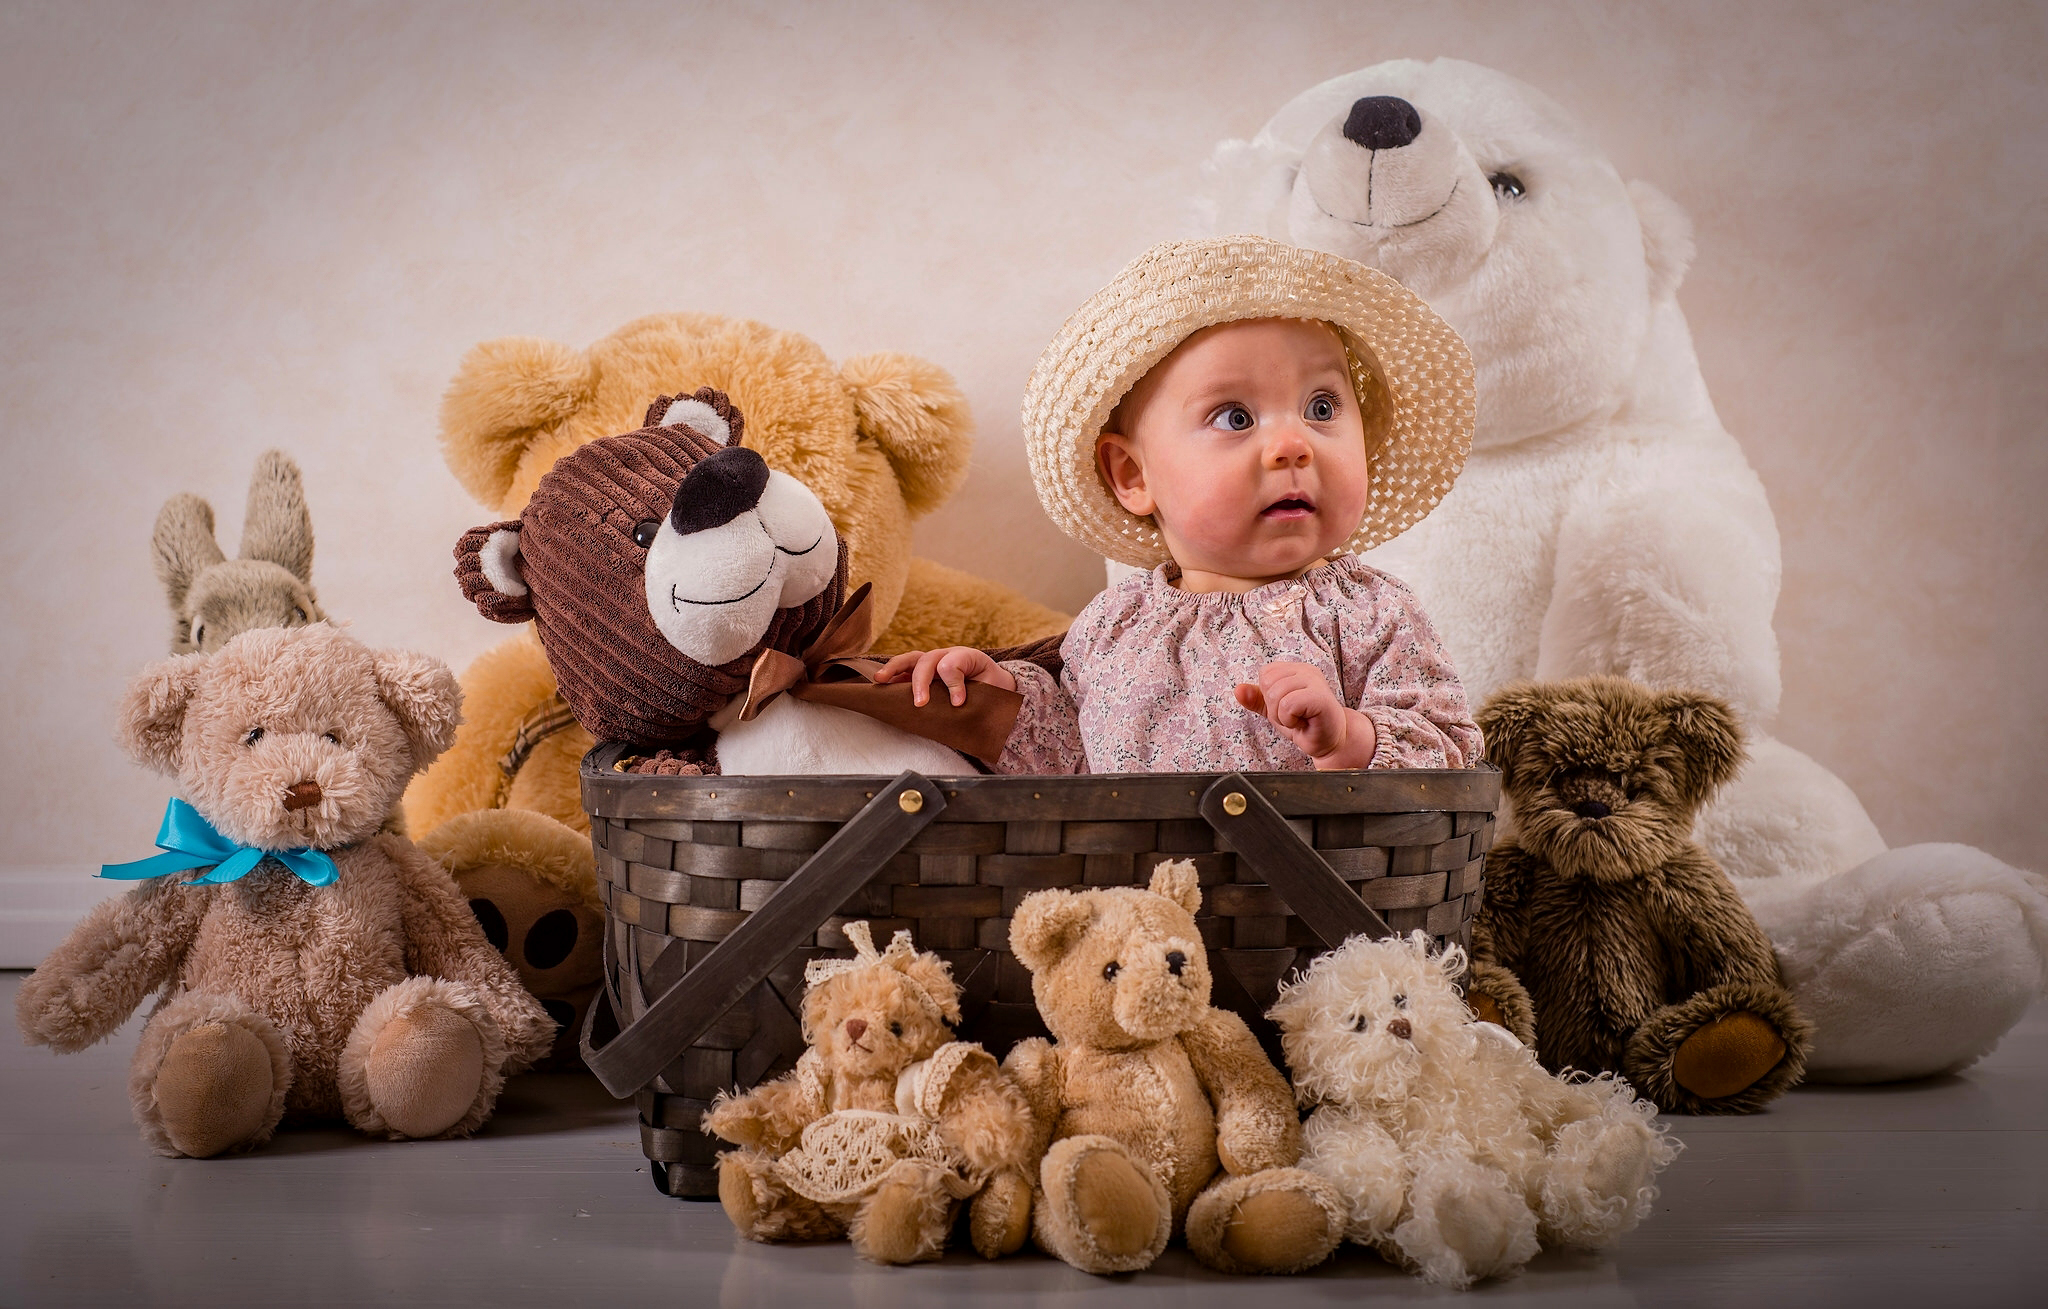 photography, baby, basket, hat, stuffed animal, teddy bear